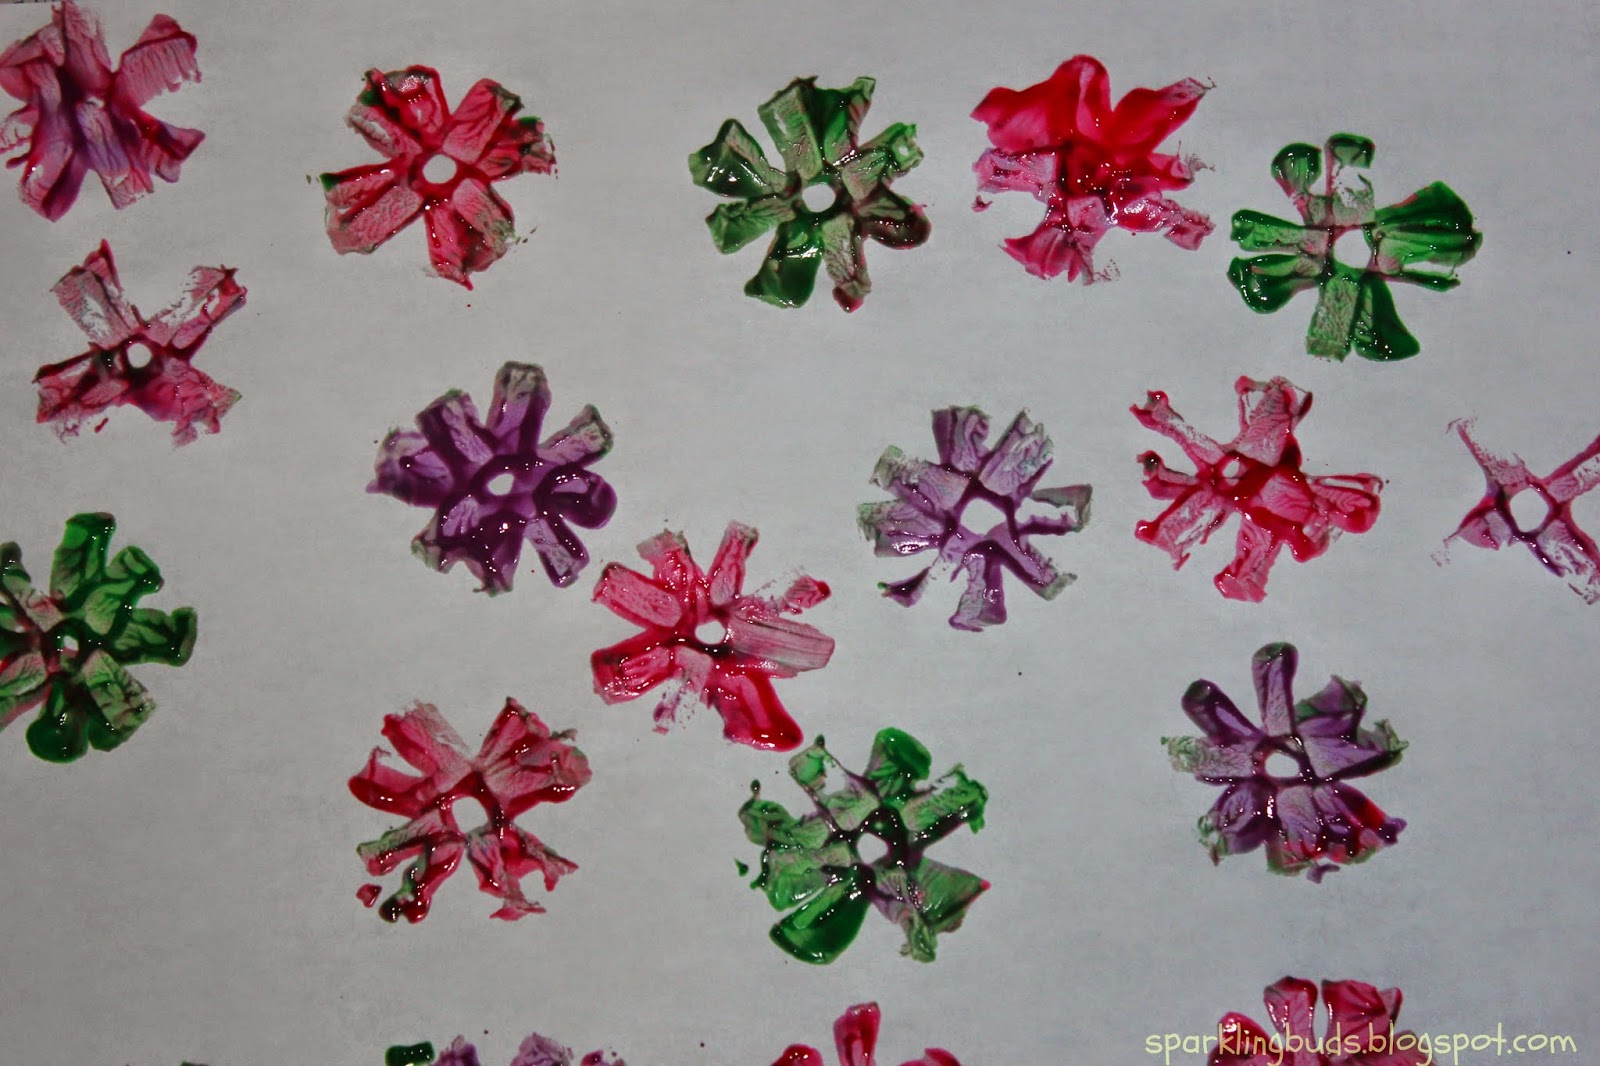 https://sparklingbuds.blogspot.com/2014/05/paper-flower-stamping.html